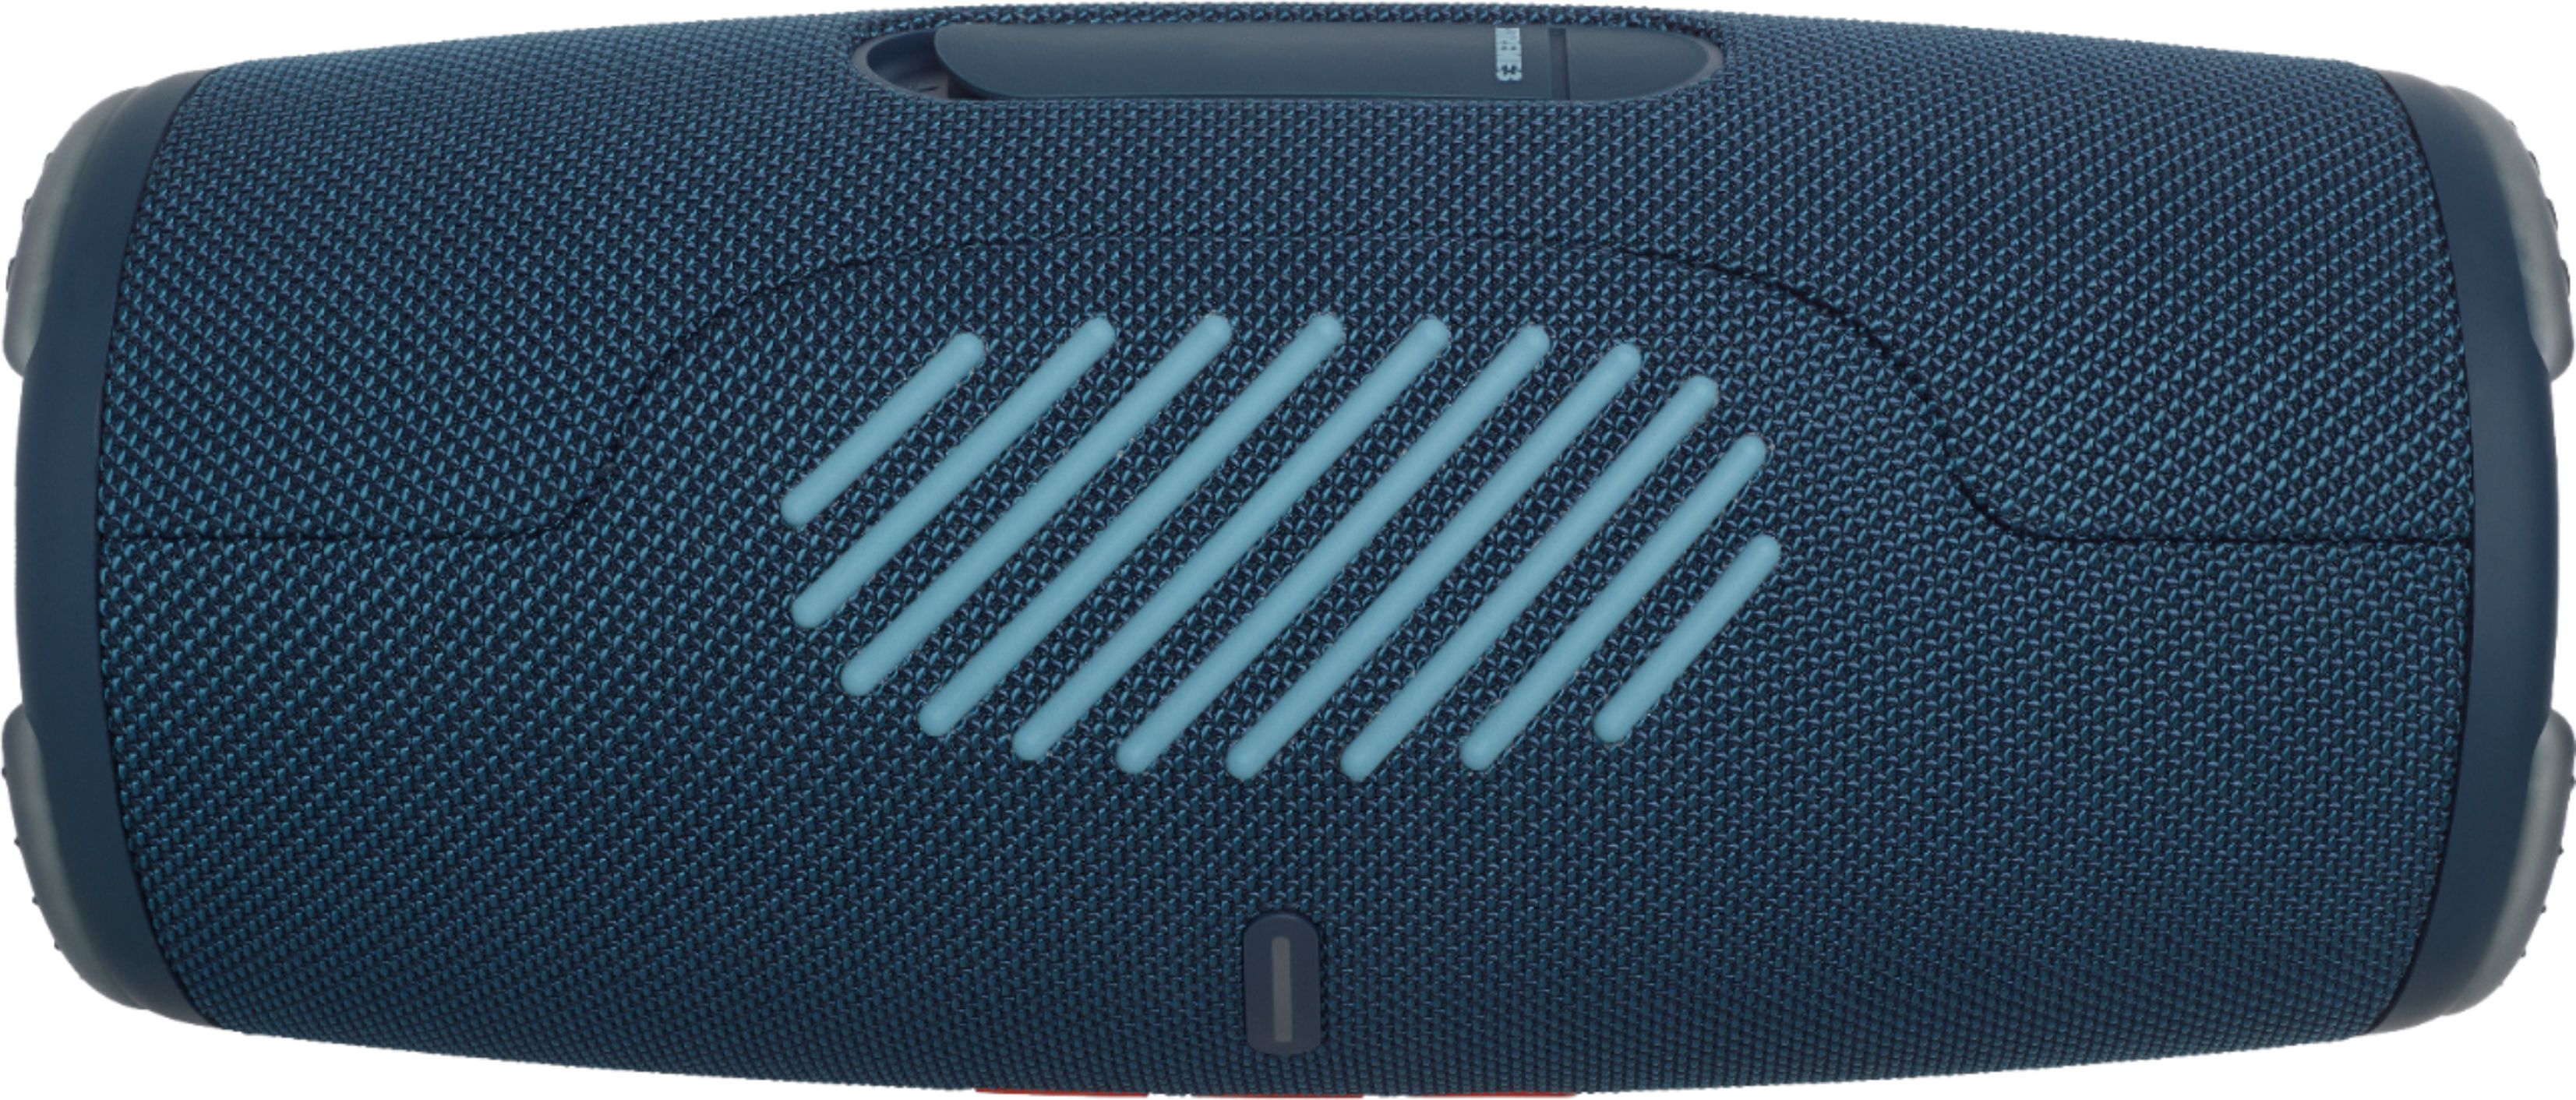 JBL Xtreme Portable Wireless Bluetooth Speaker (Blue)